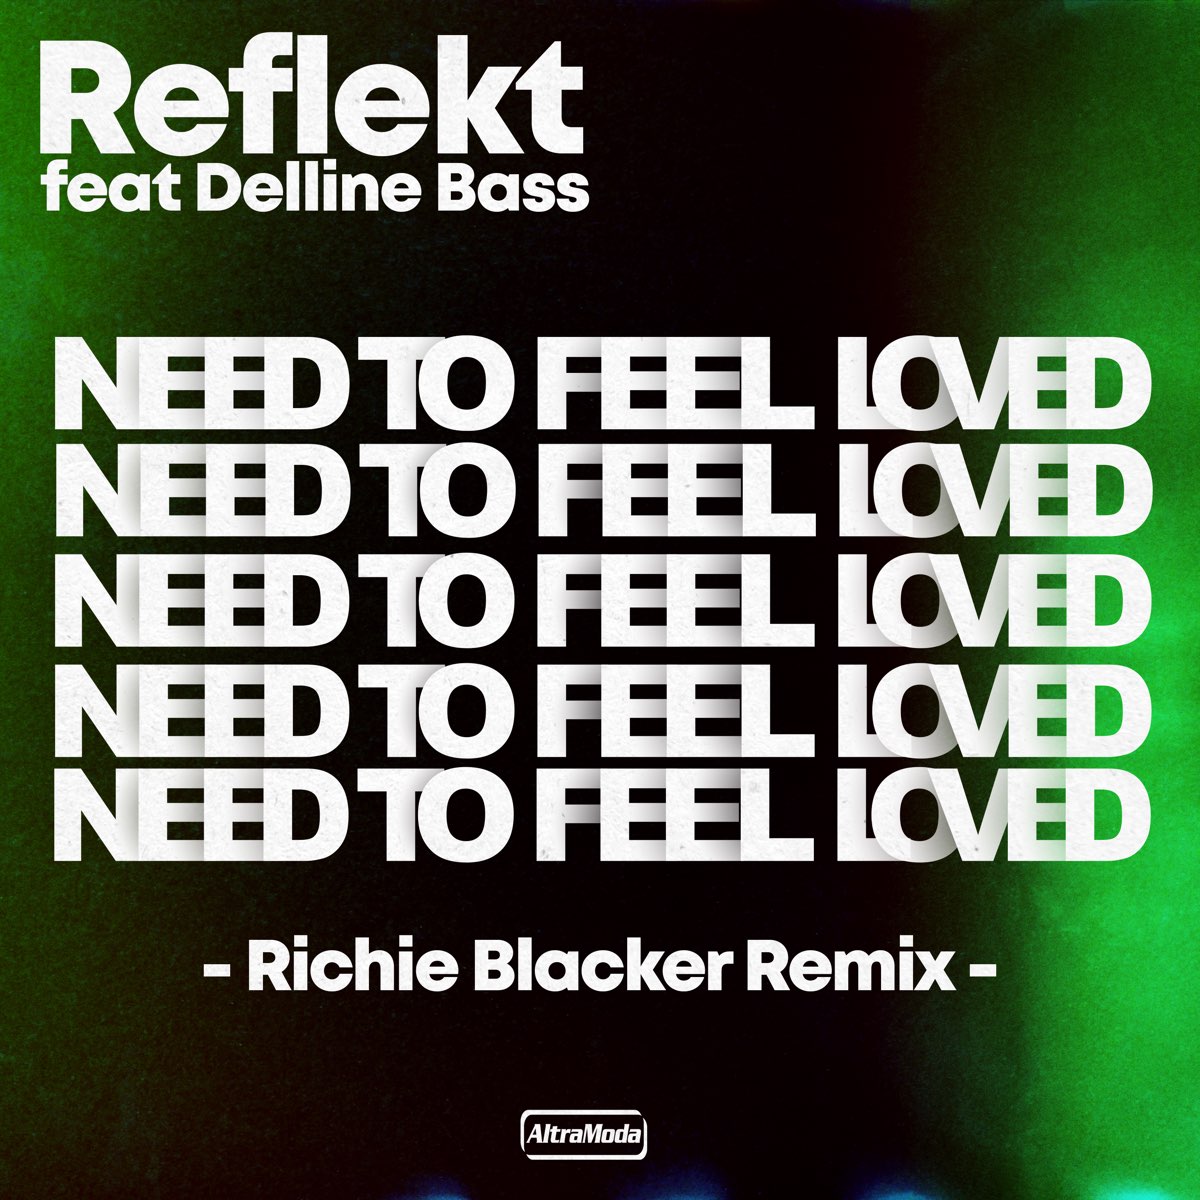 Reflekt delline bass. Reflekt ft. Delline Bass need to feel Loved. Reflekt feat. Delline Bass. Reflekt need to feel Loved. Reflekt feat. Delline Bass - need to feel Loved (Adam k & Soha Vocal Remix).